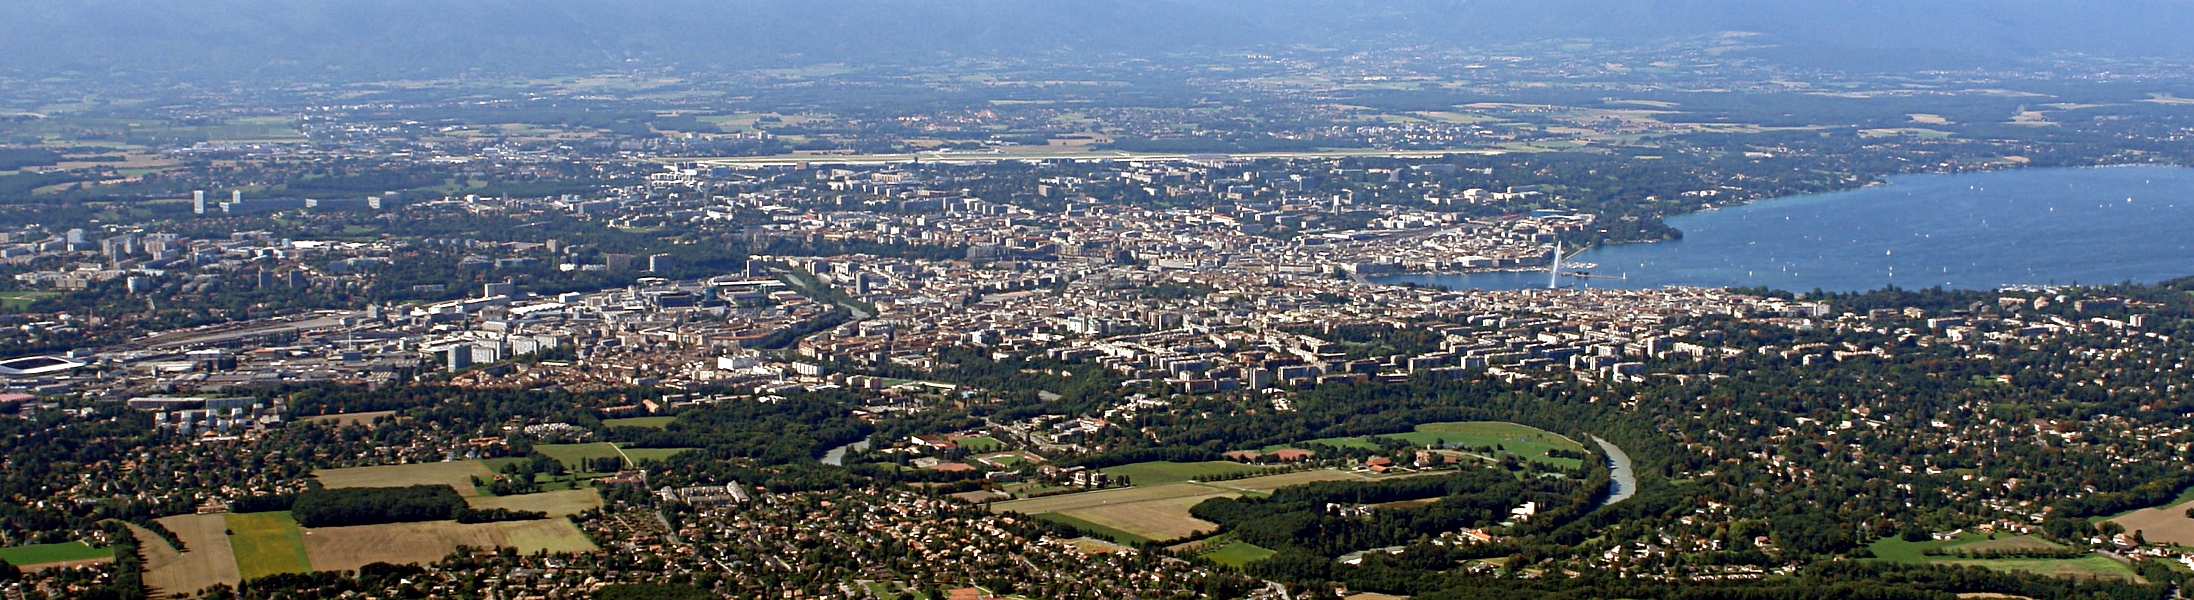 http://upload.wikimedia.org/wikipedia/commons/3/3b/Geneva_from_Mount_Sal%C3%A8ve.jpg